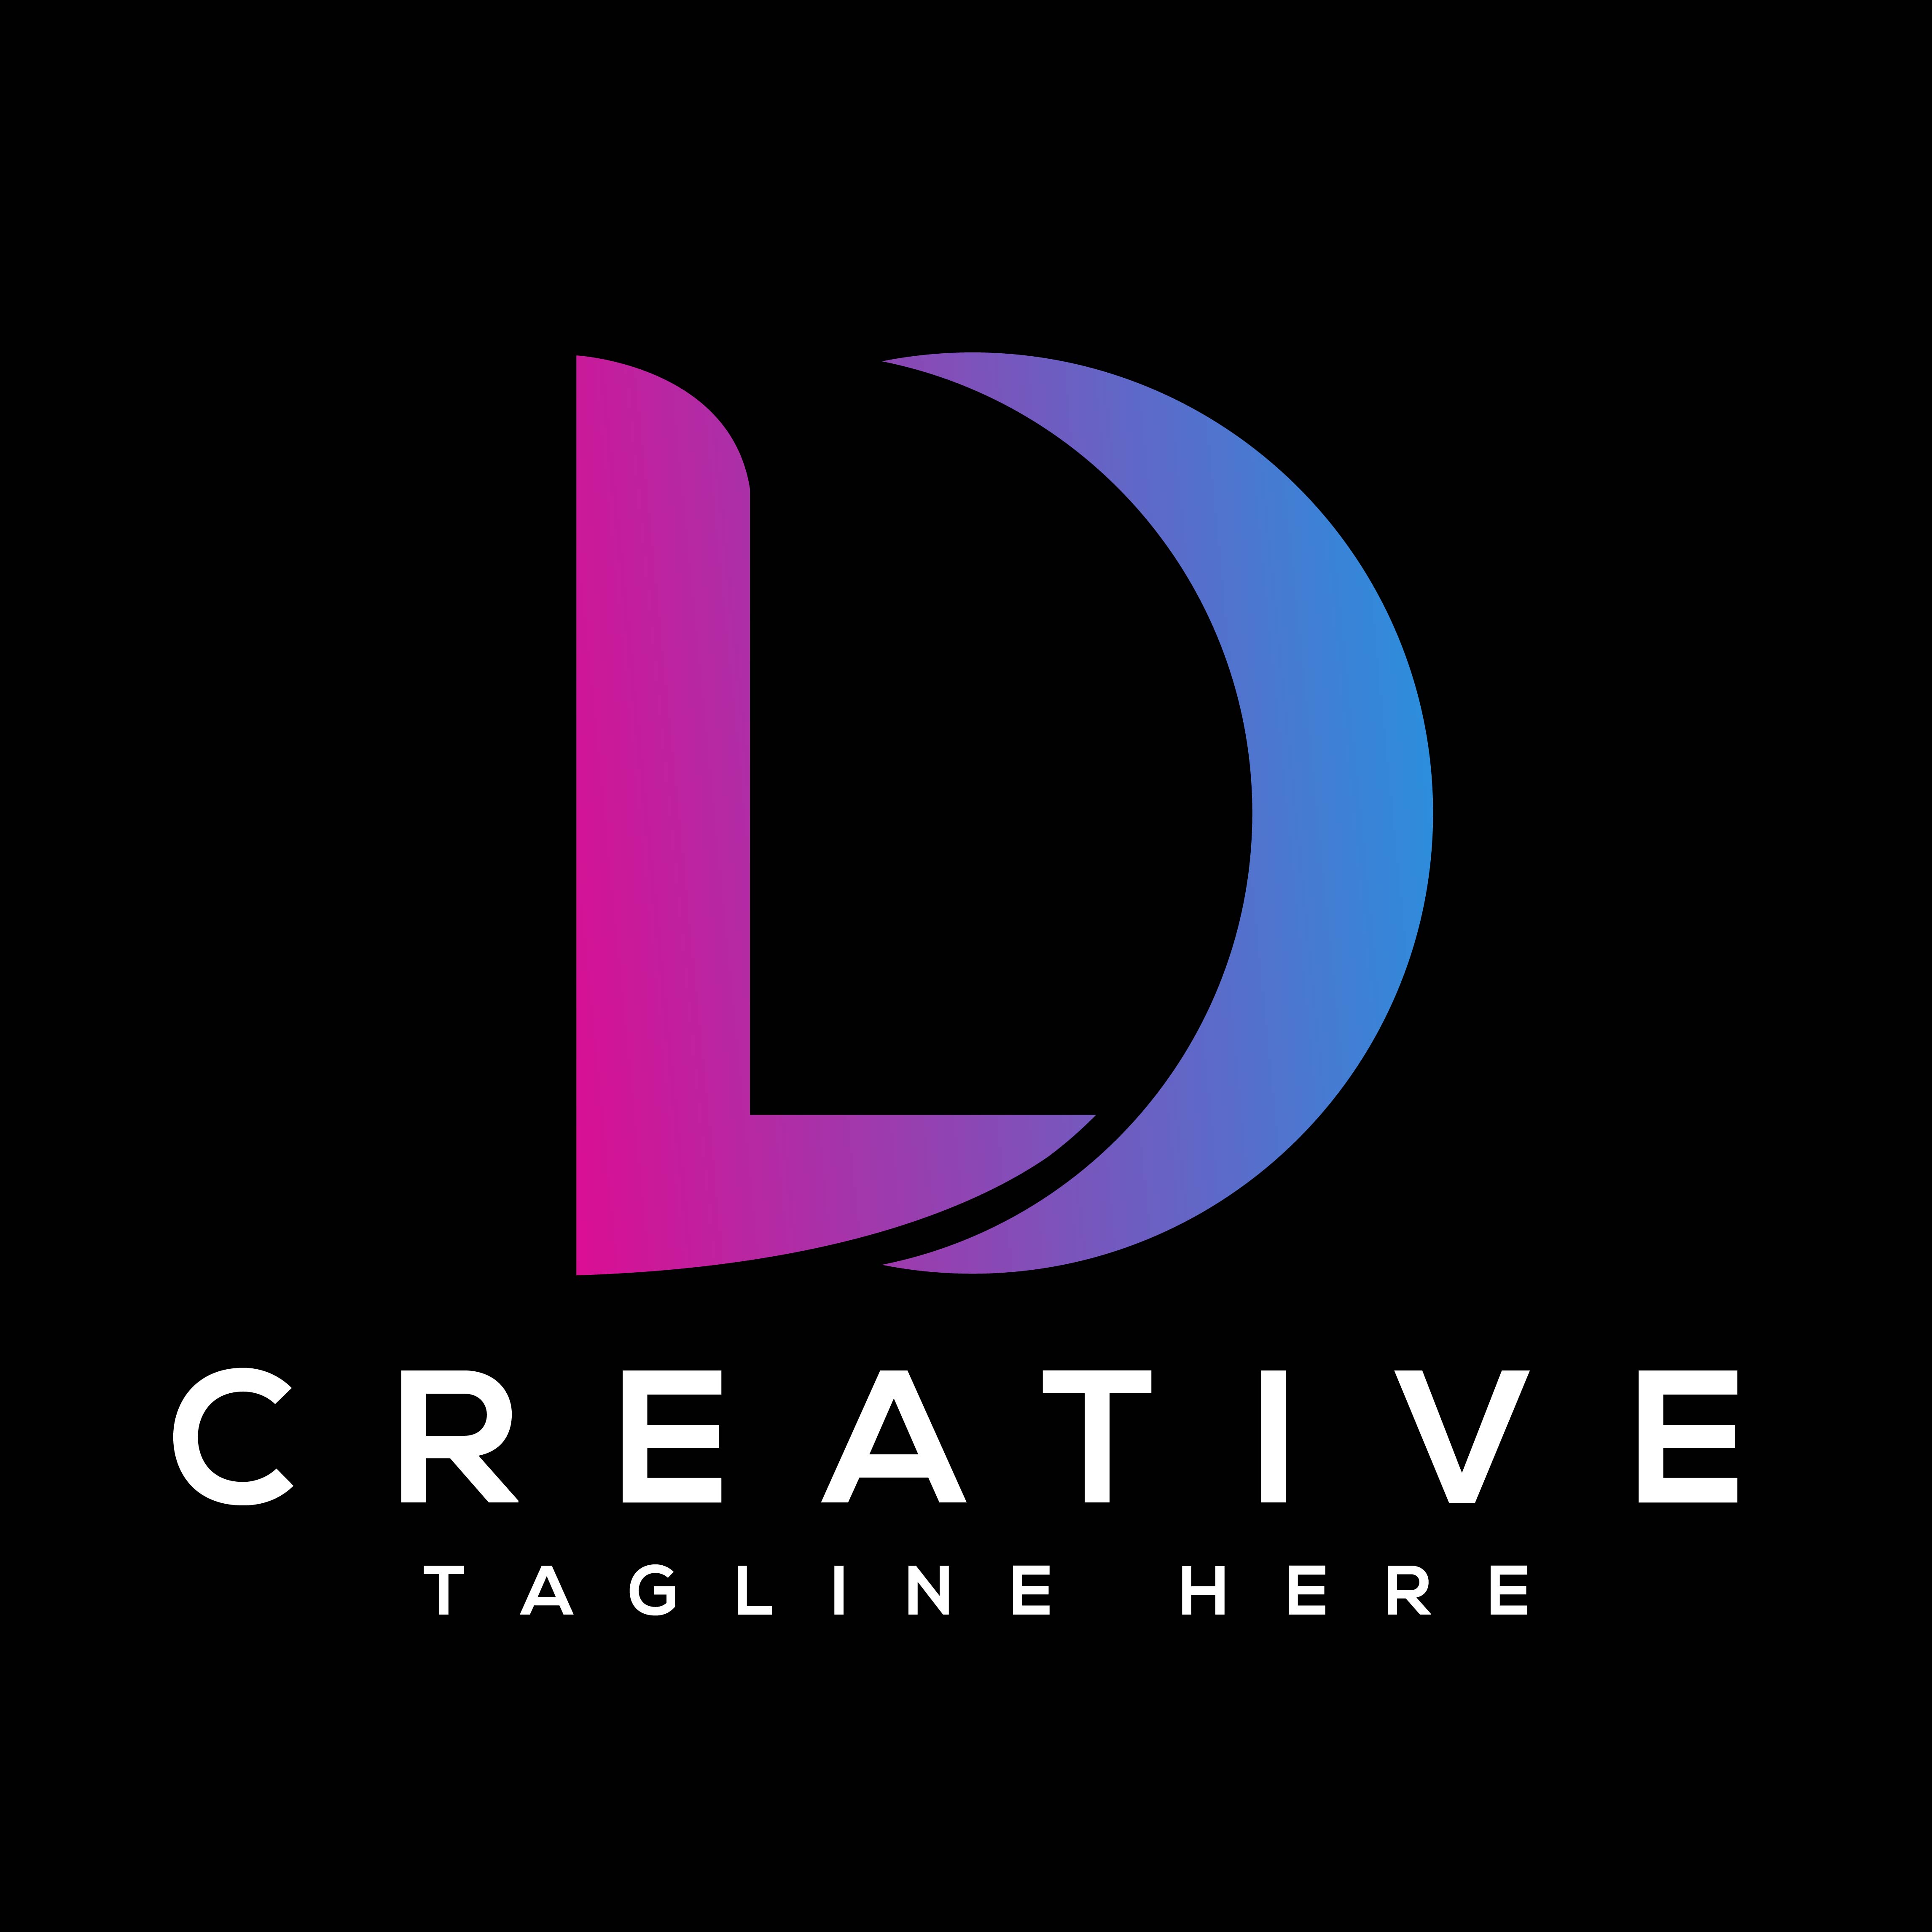 Letter LD Logo Design image preview.